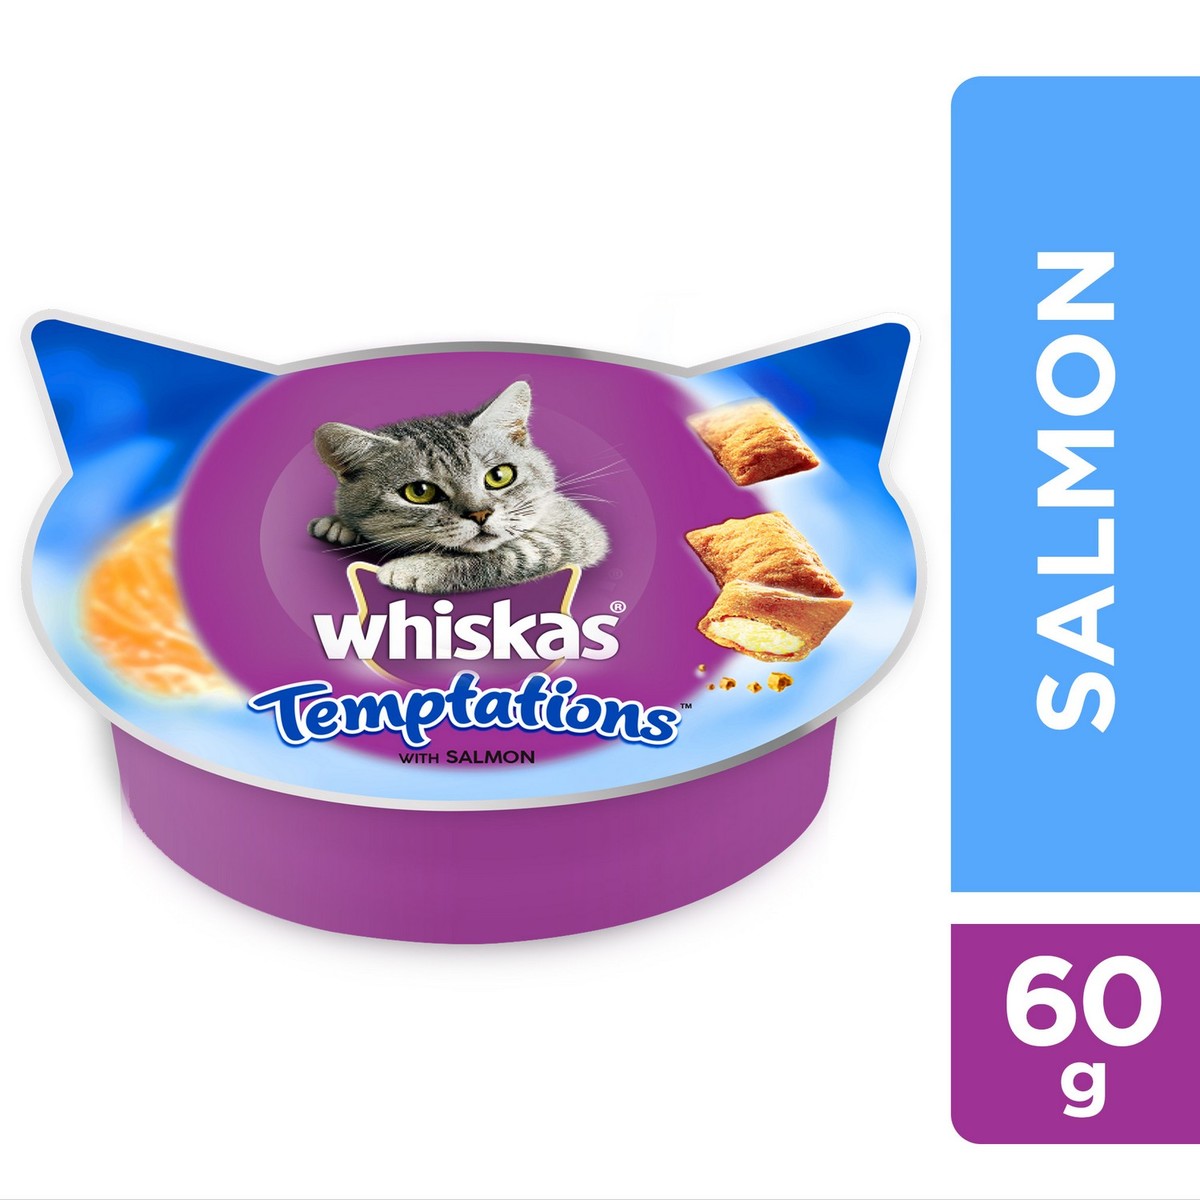 Whiskas Temptations with Salmon Cat Treats 60 g